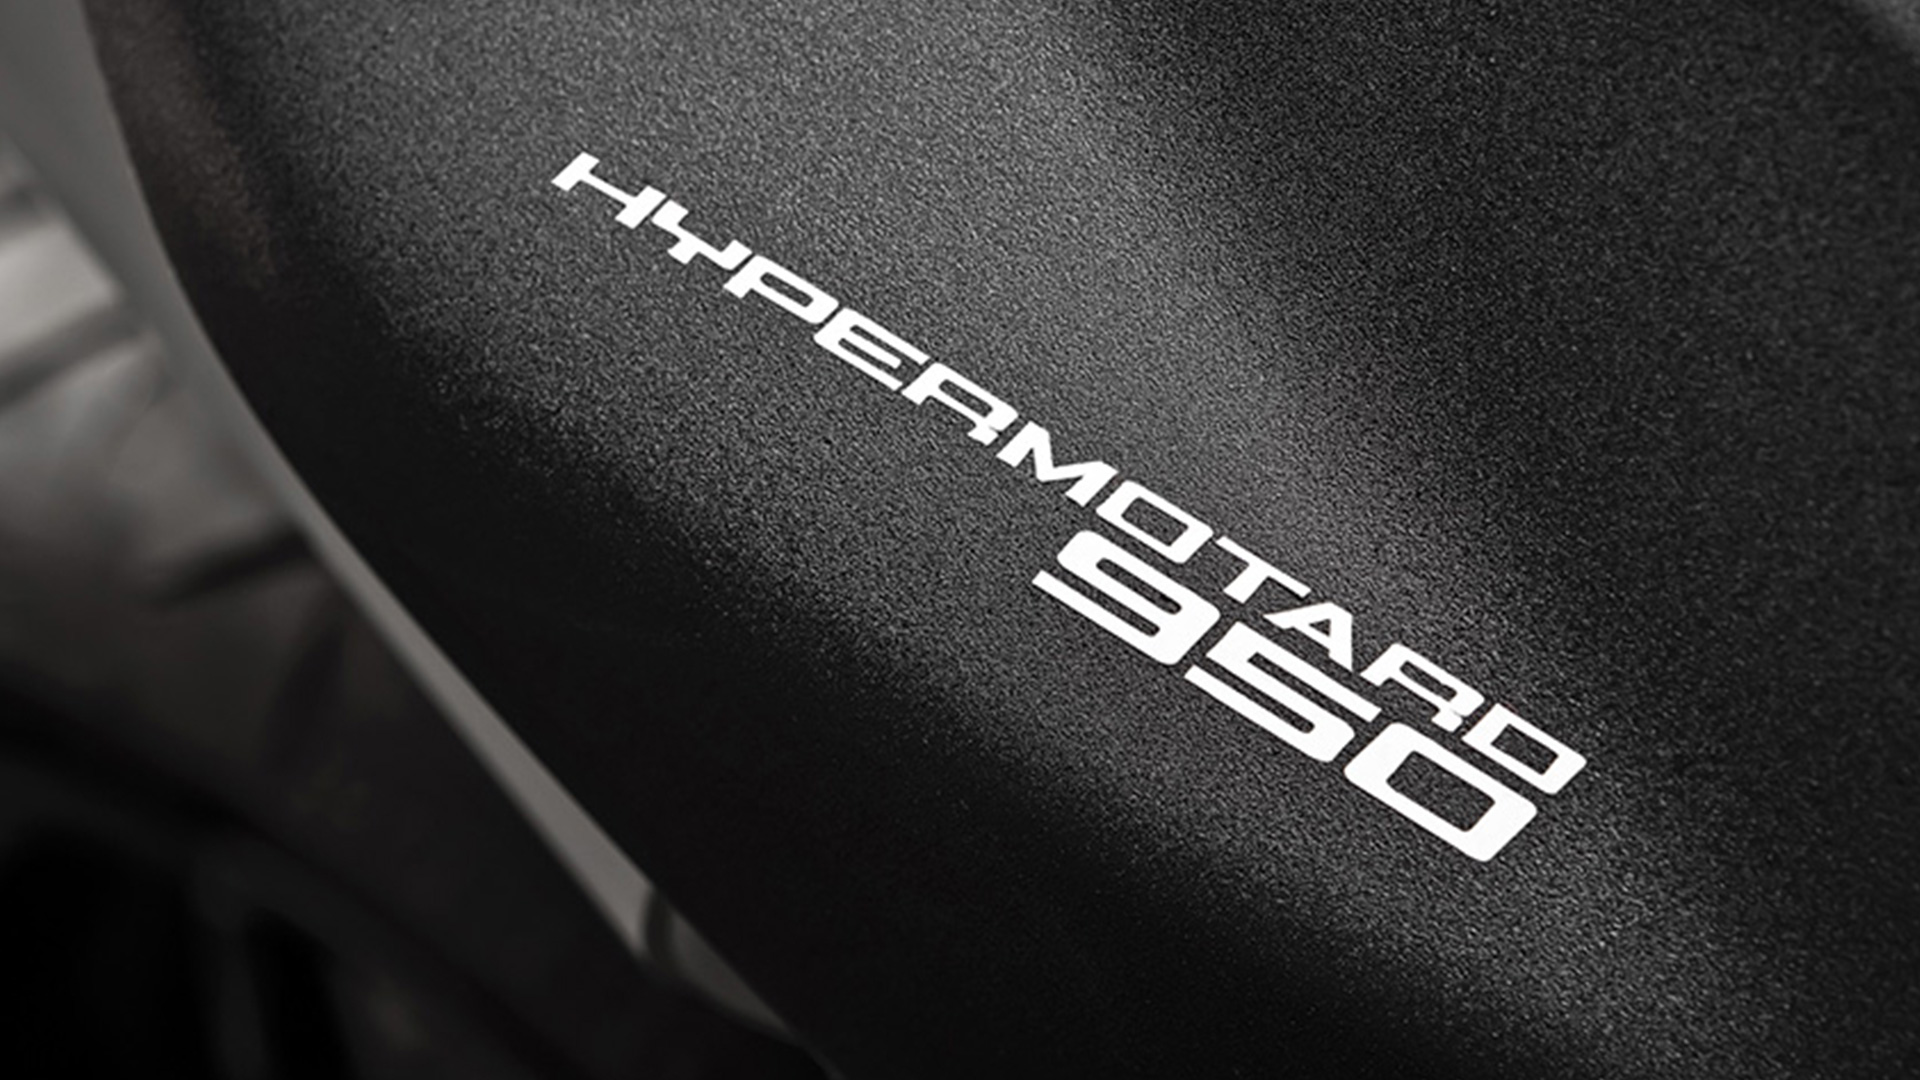 Ducati Hypermotard 950 2019 STD